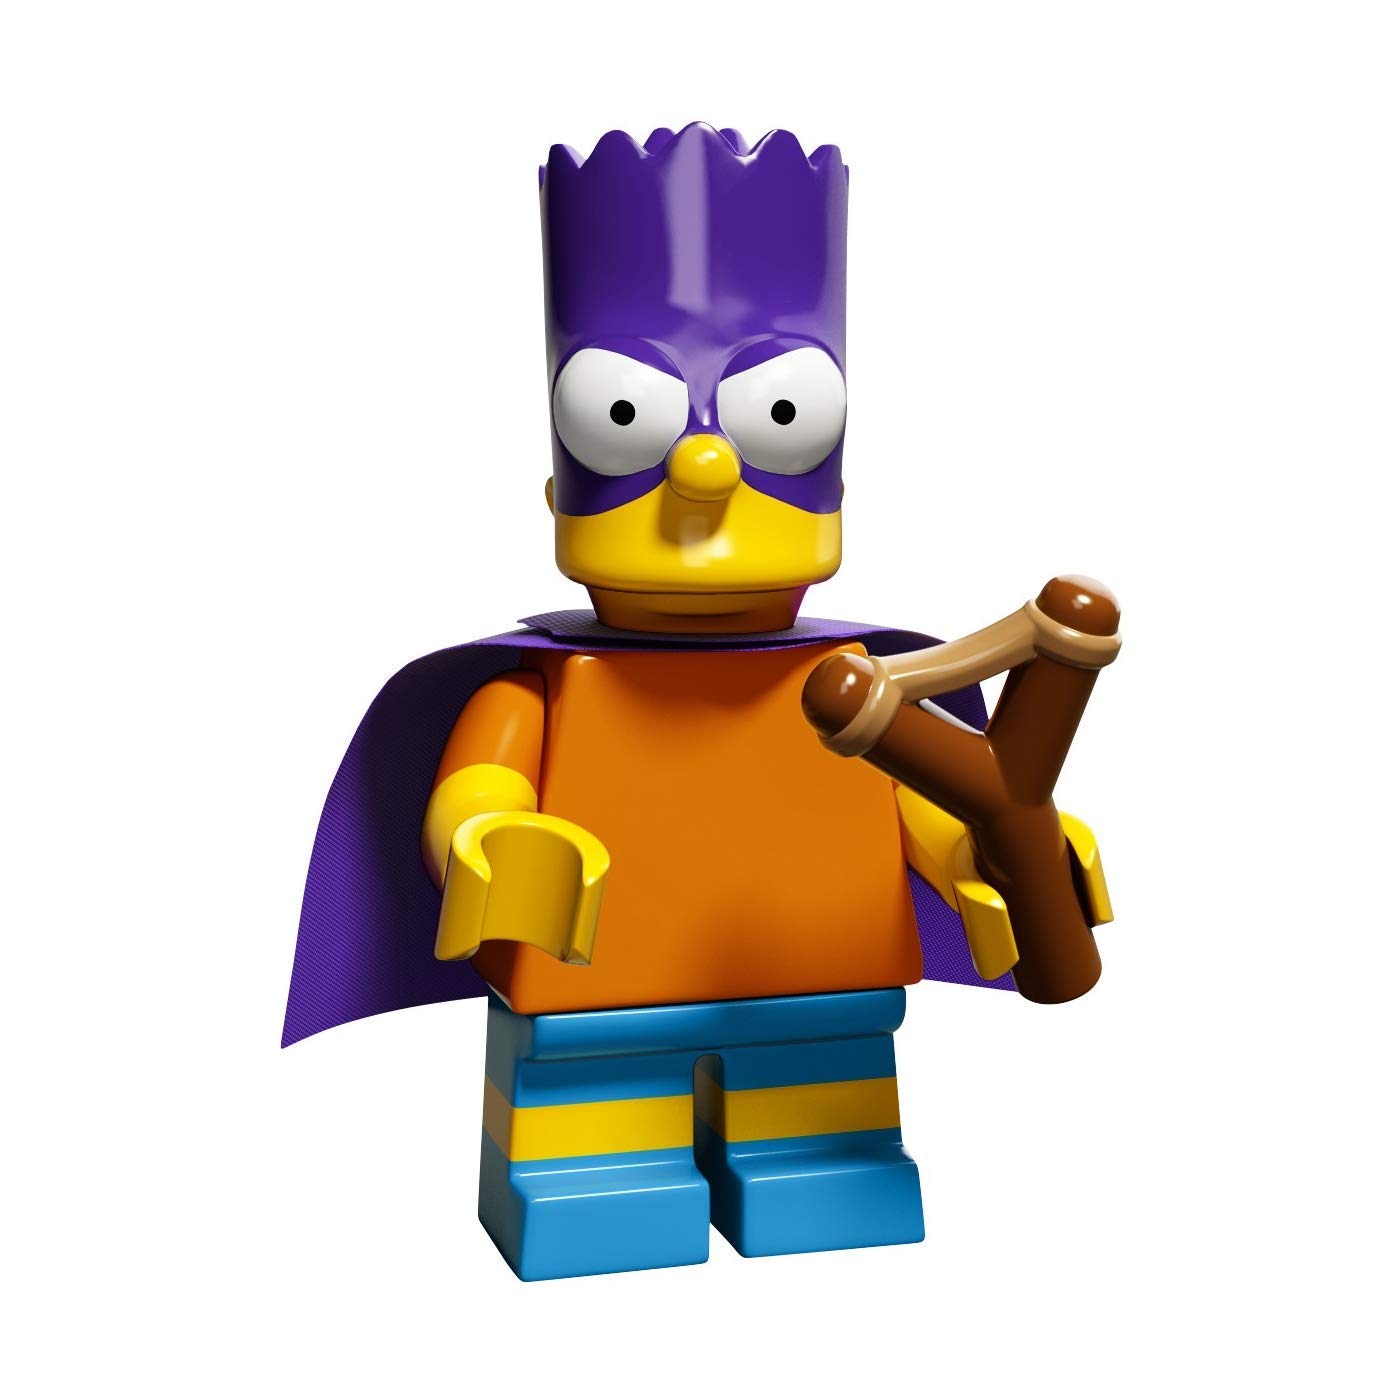 Lego Simpsons Series 2 Collectible Minif Igure 71009 – Bart Simpson Bartman